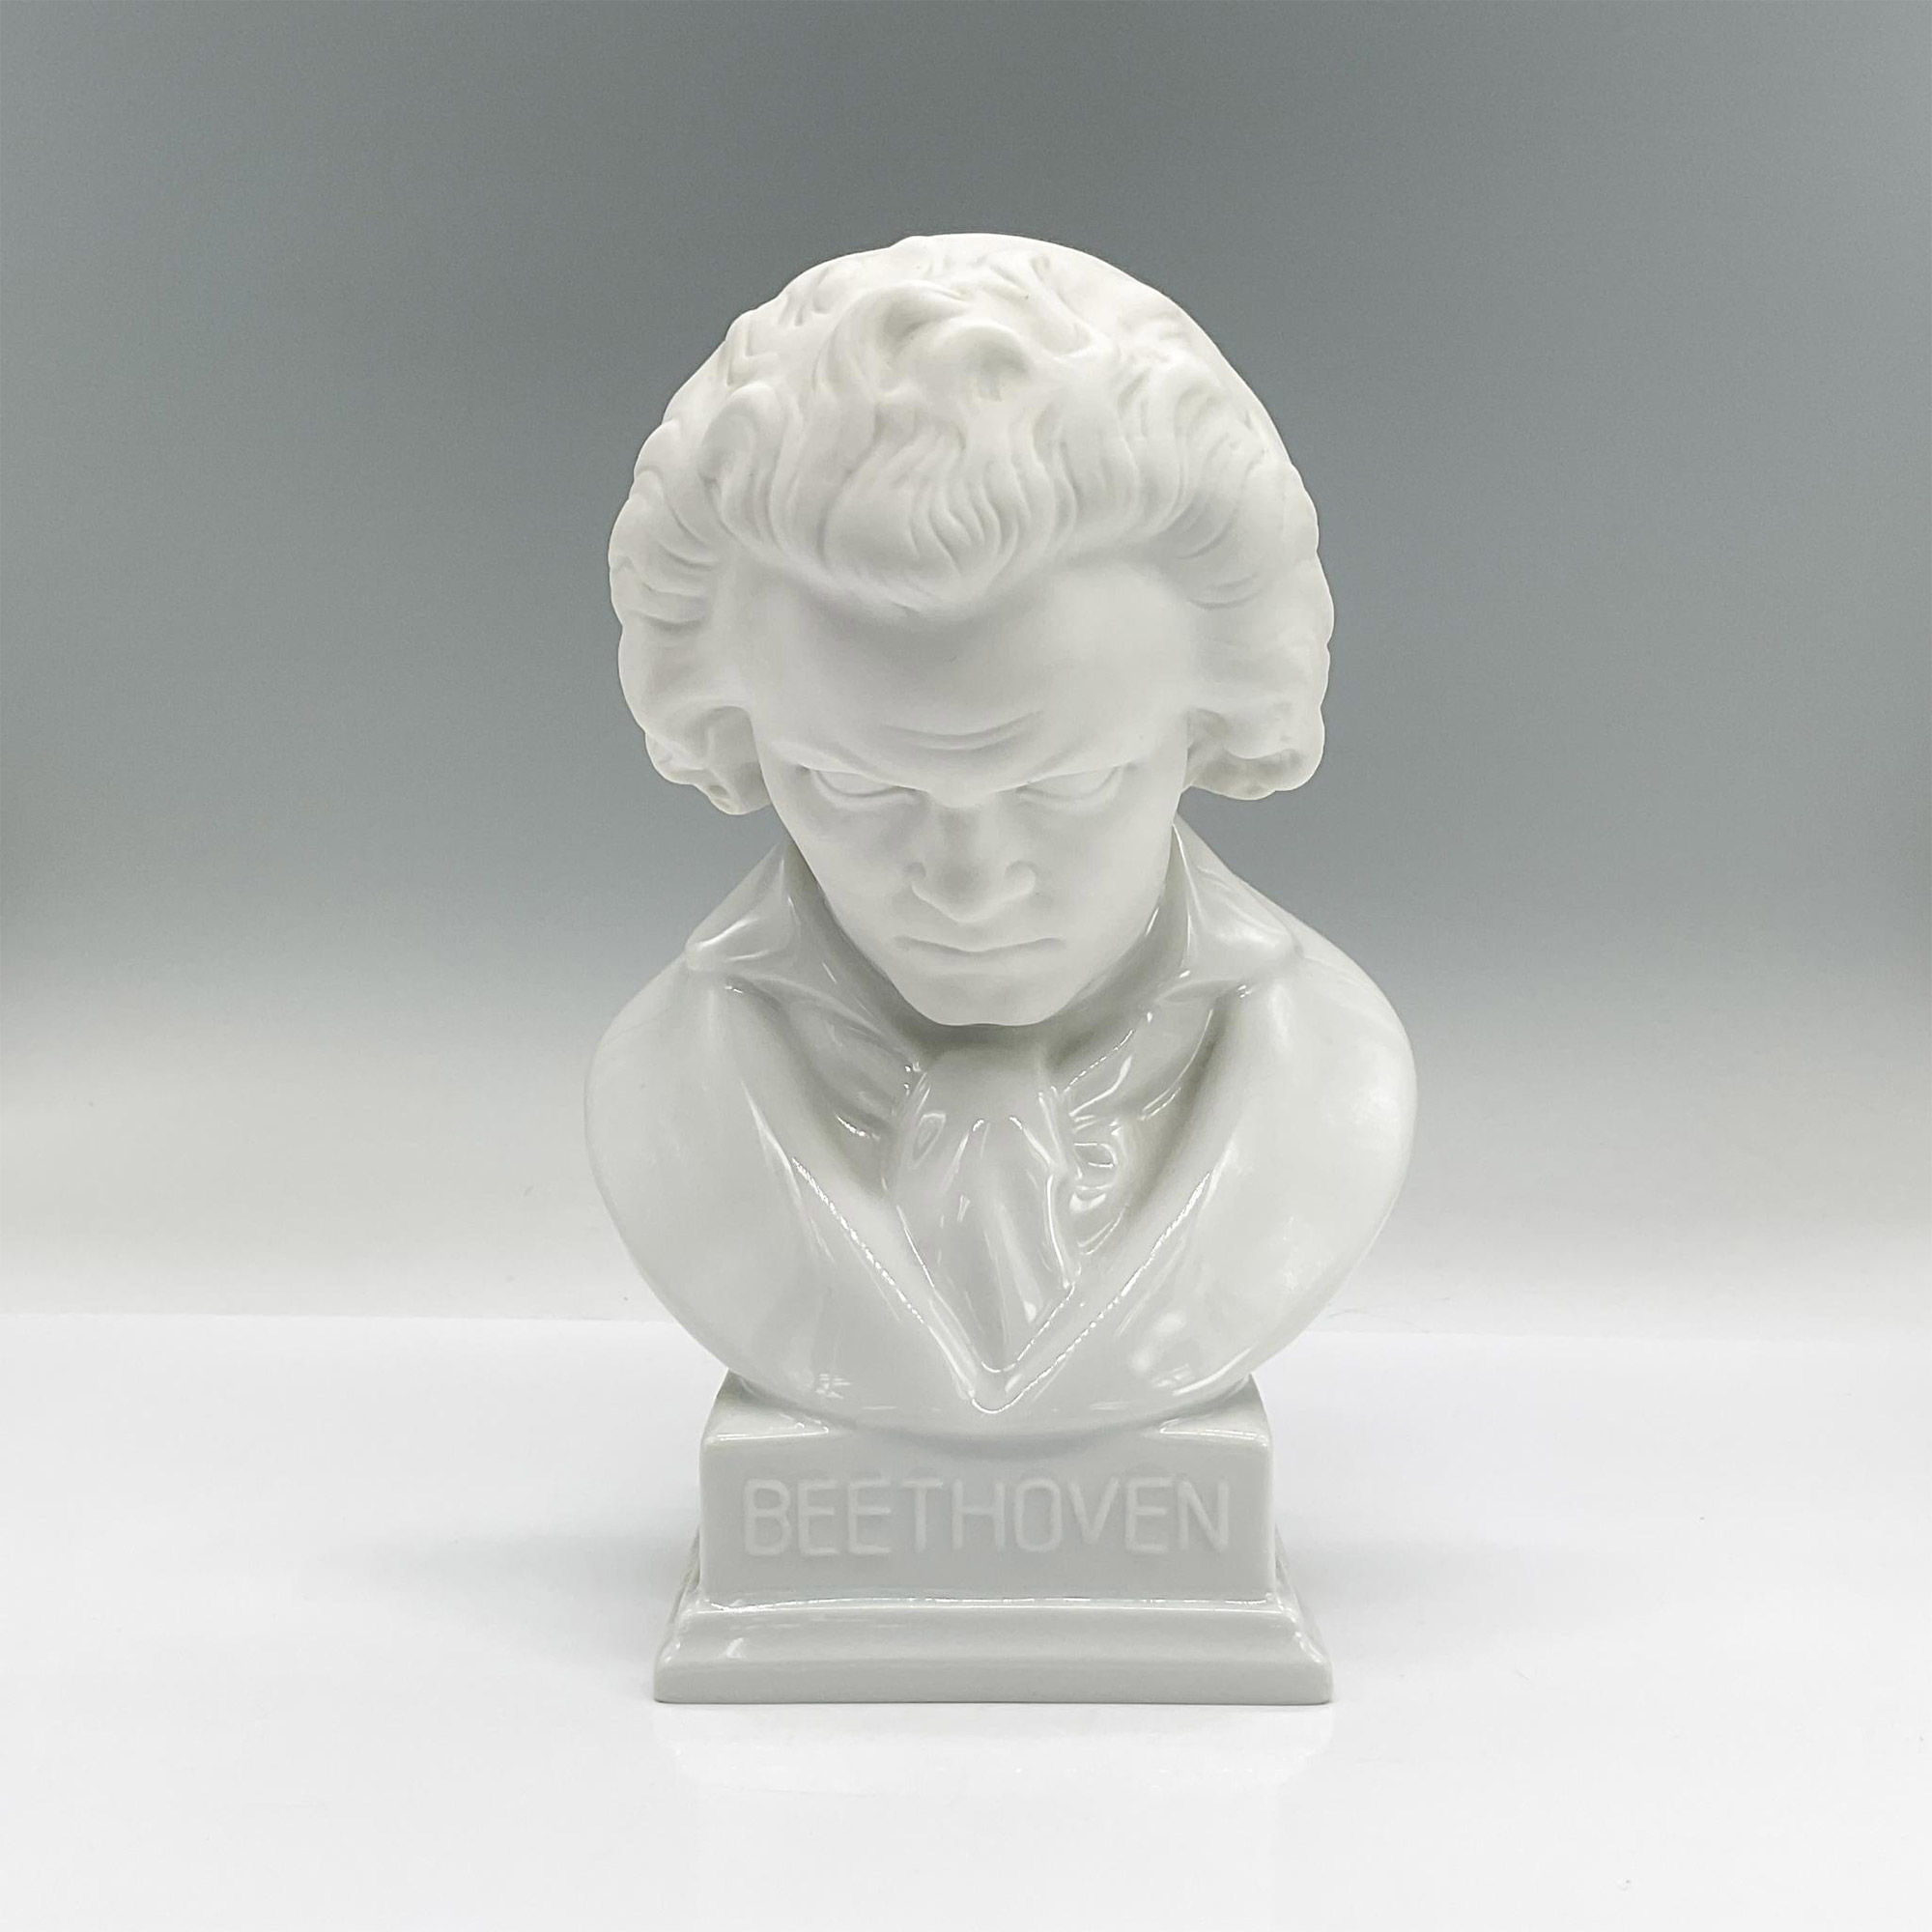 Herend Porzellan Bust, Beethoven - Image 2 of 4